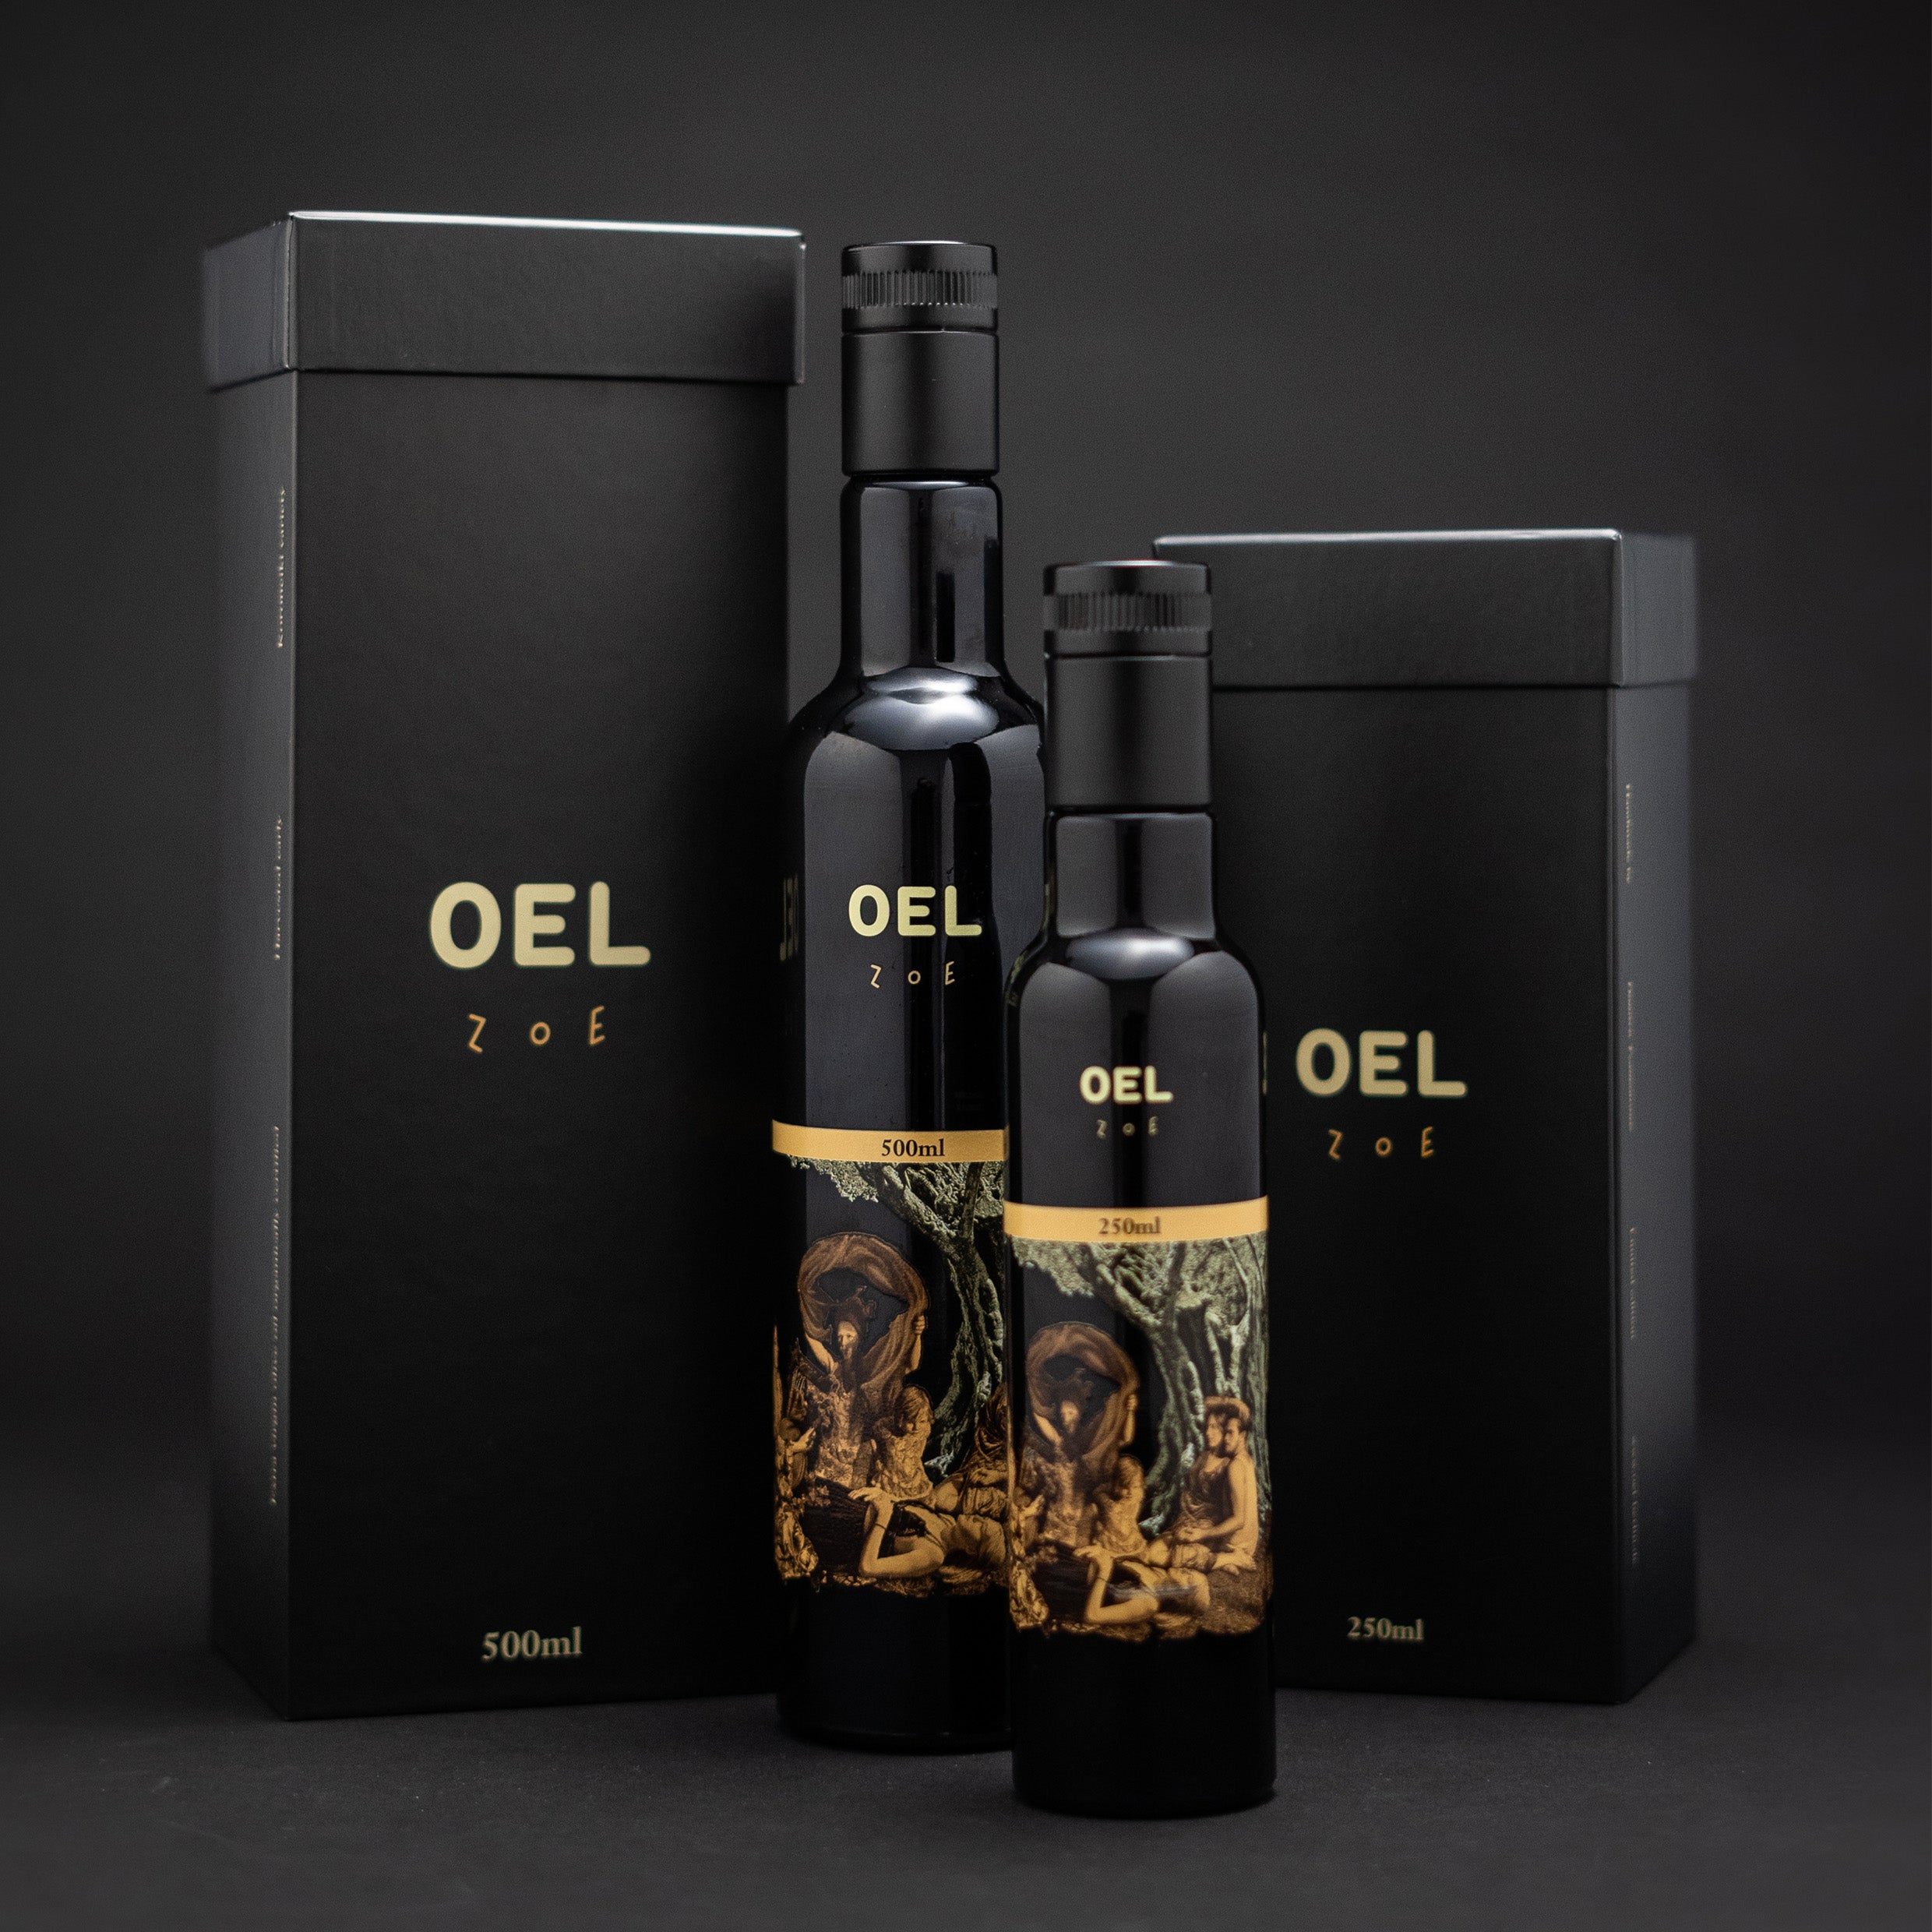 OEL Zoe 250 ml – Premium Organic Extra Virgin Olive Oil from early harvest